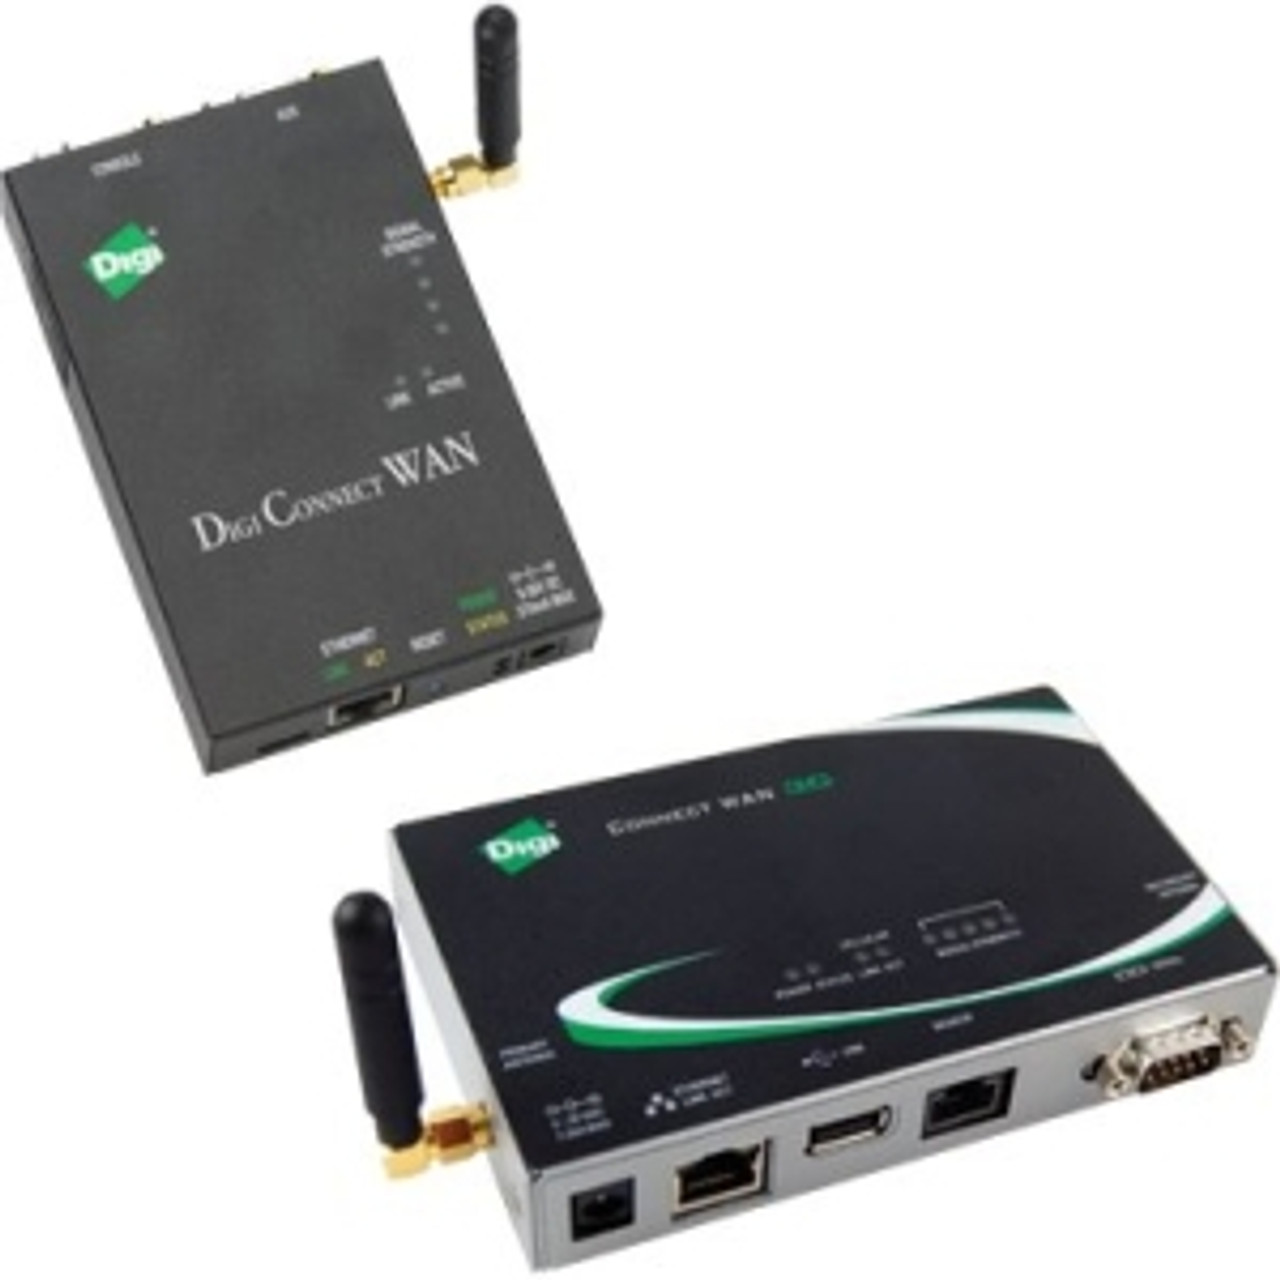 DC-WAN-B105 Digi Digi Connect Wireless Router 2 x Antenna 1 x Network Port Desktop, Rail-mountable (Refurbished)